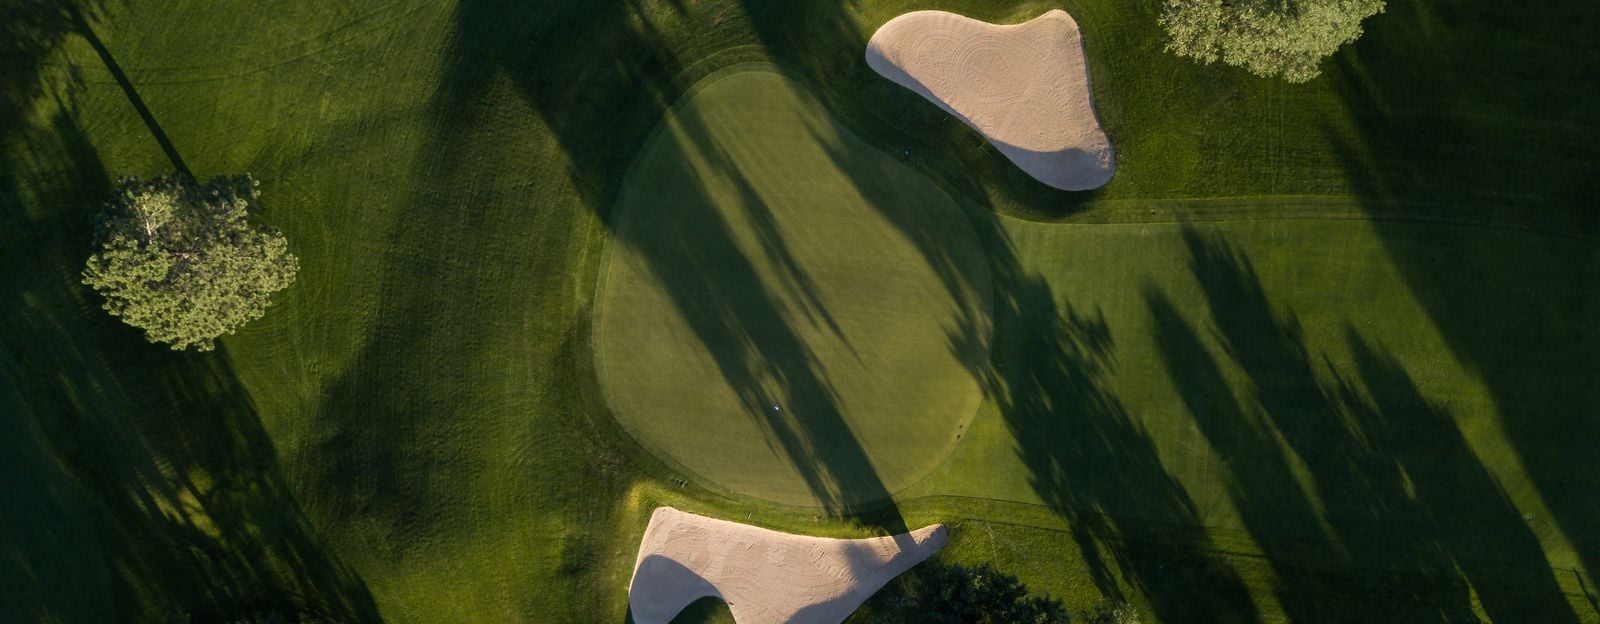 lake joseph golf club in muskoka aerial picture of green (1)